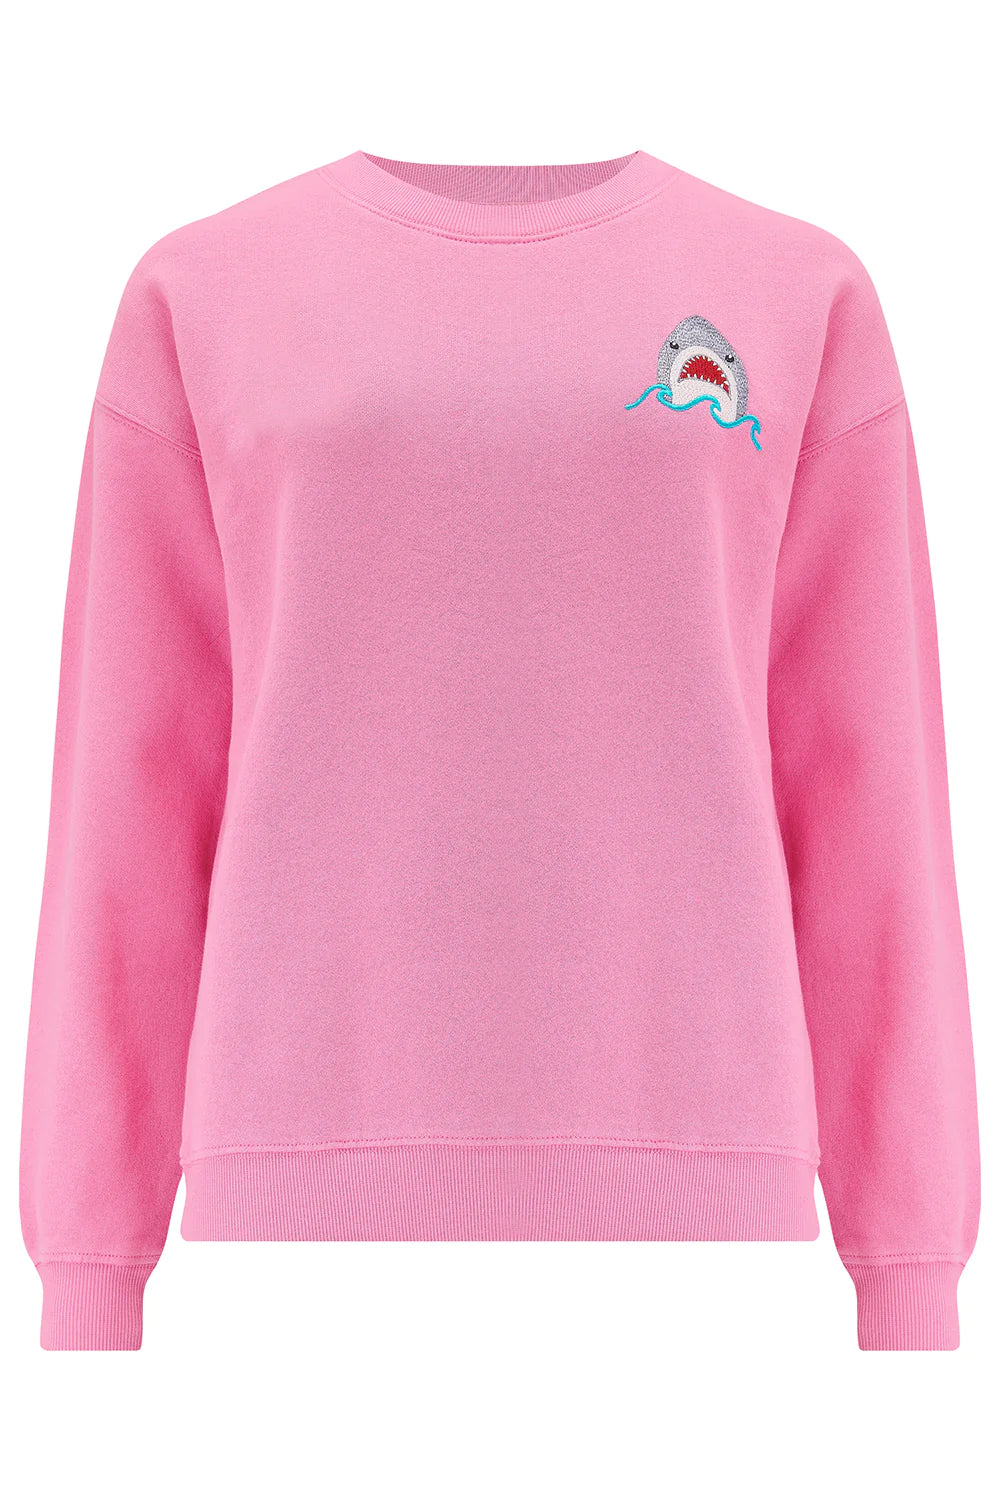 Noah Sweatshirt in Pink with Shark Embroidery